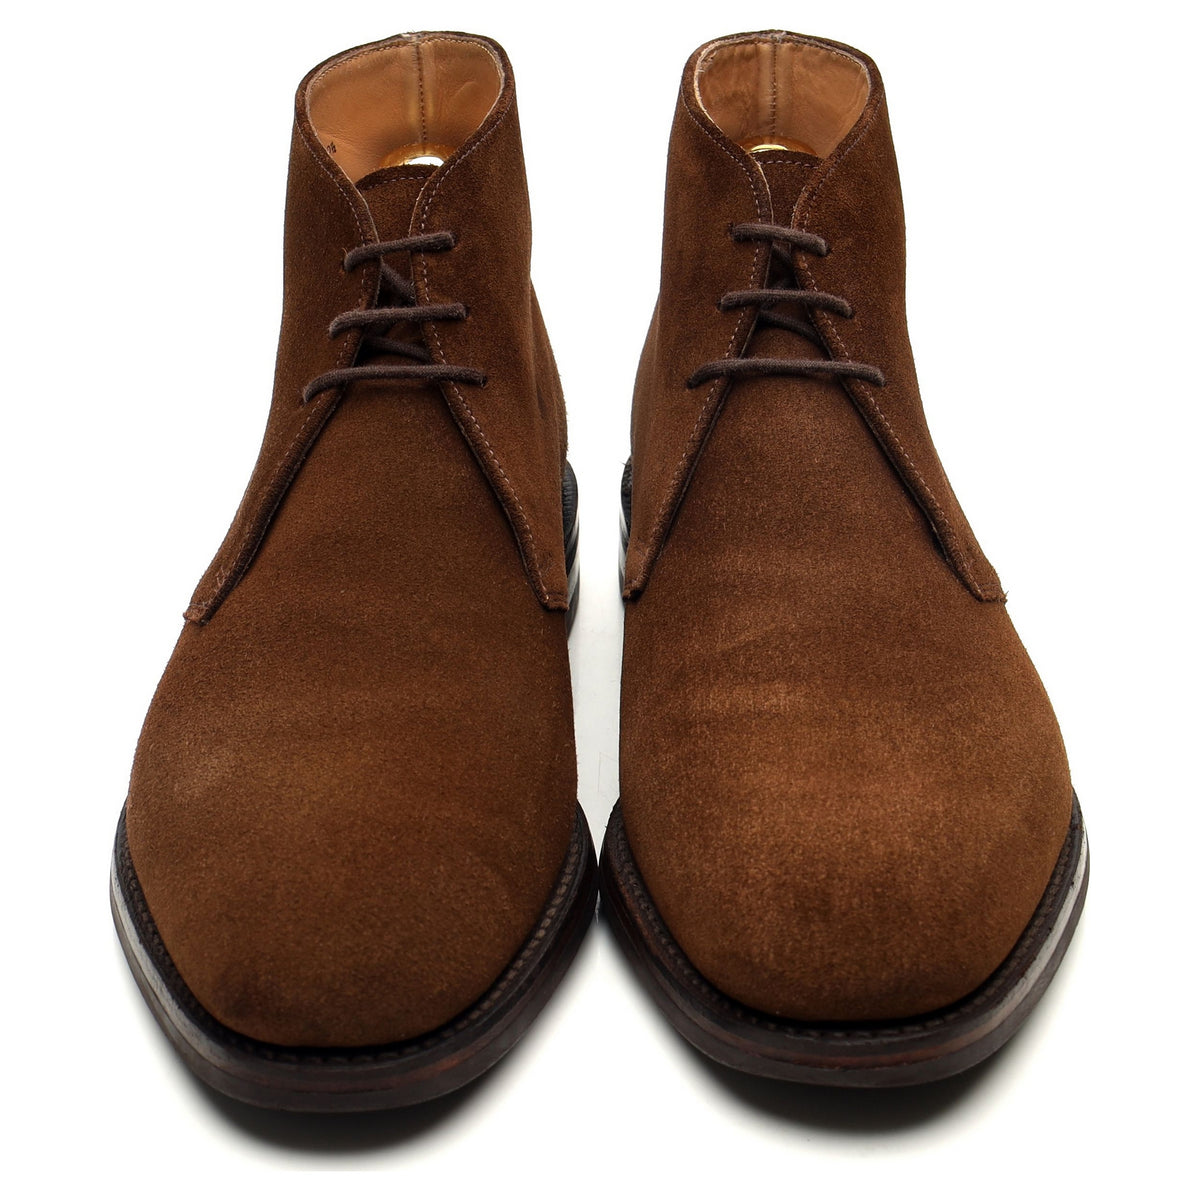 1880 &#39;Kempton&#39; Brown Suede Chukka Boots UK 10.5 F